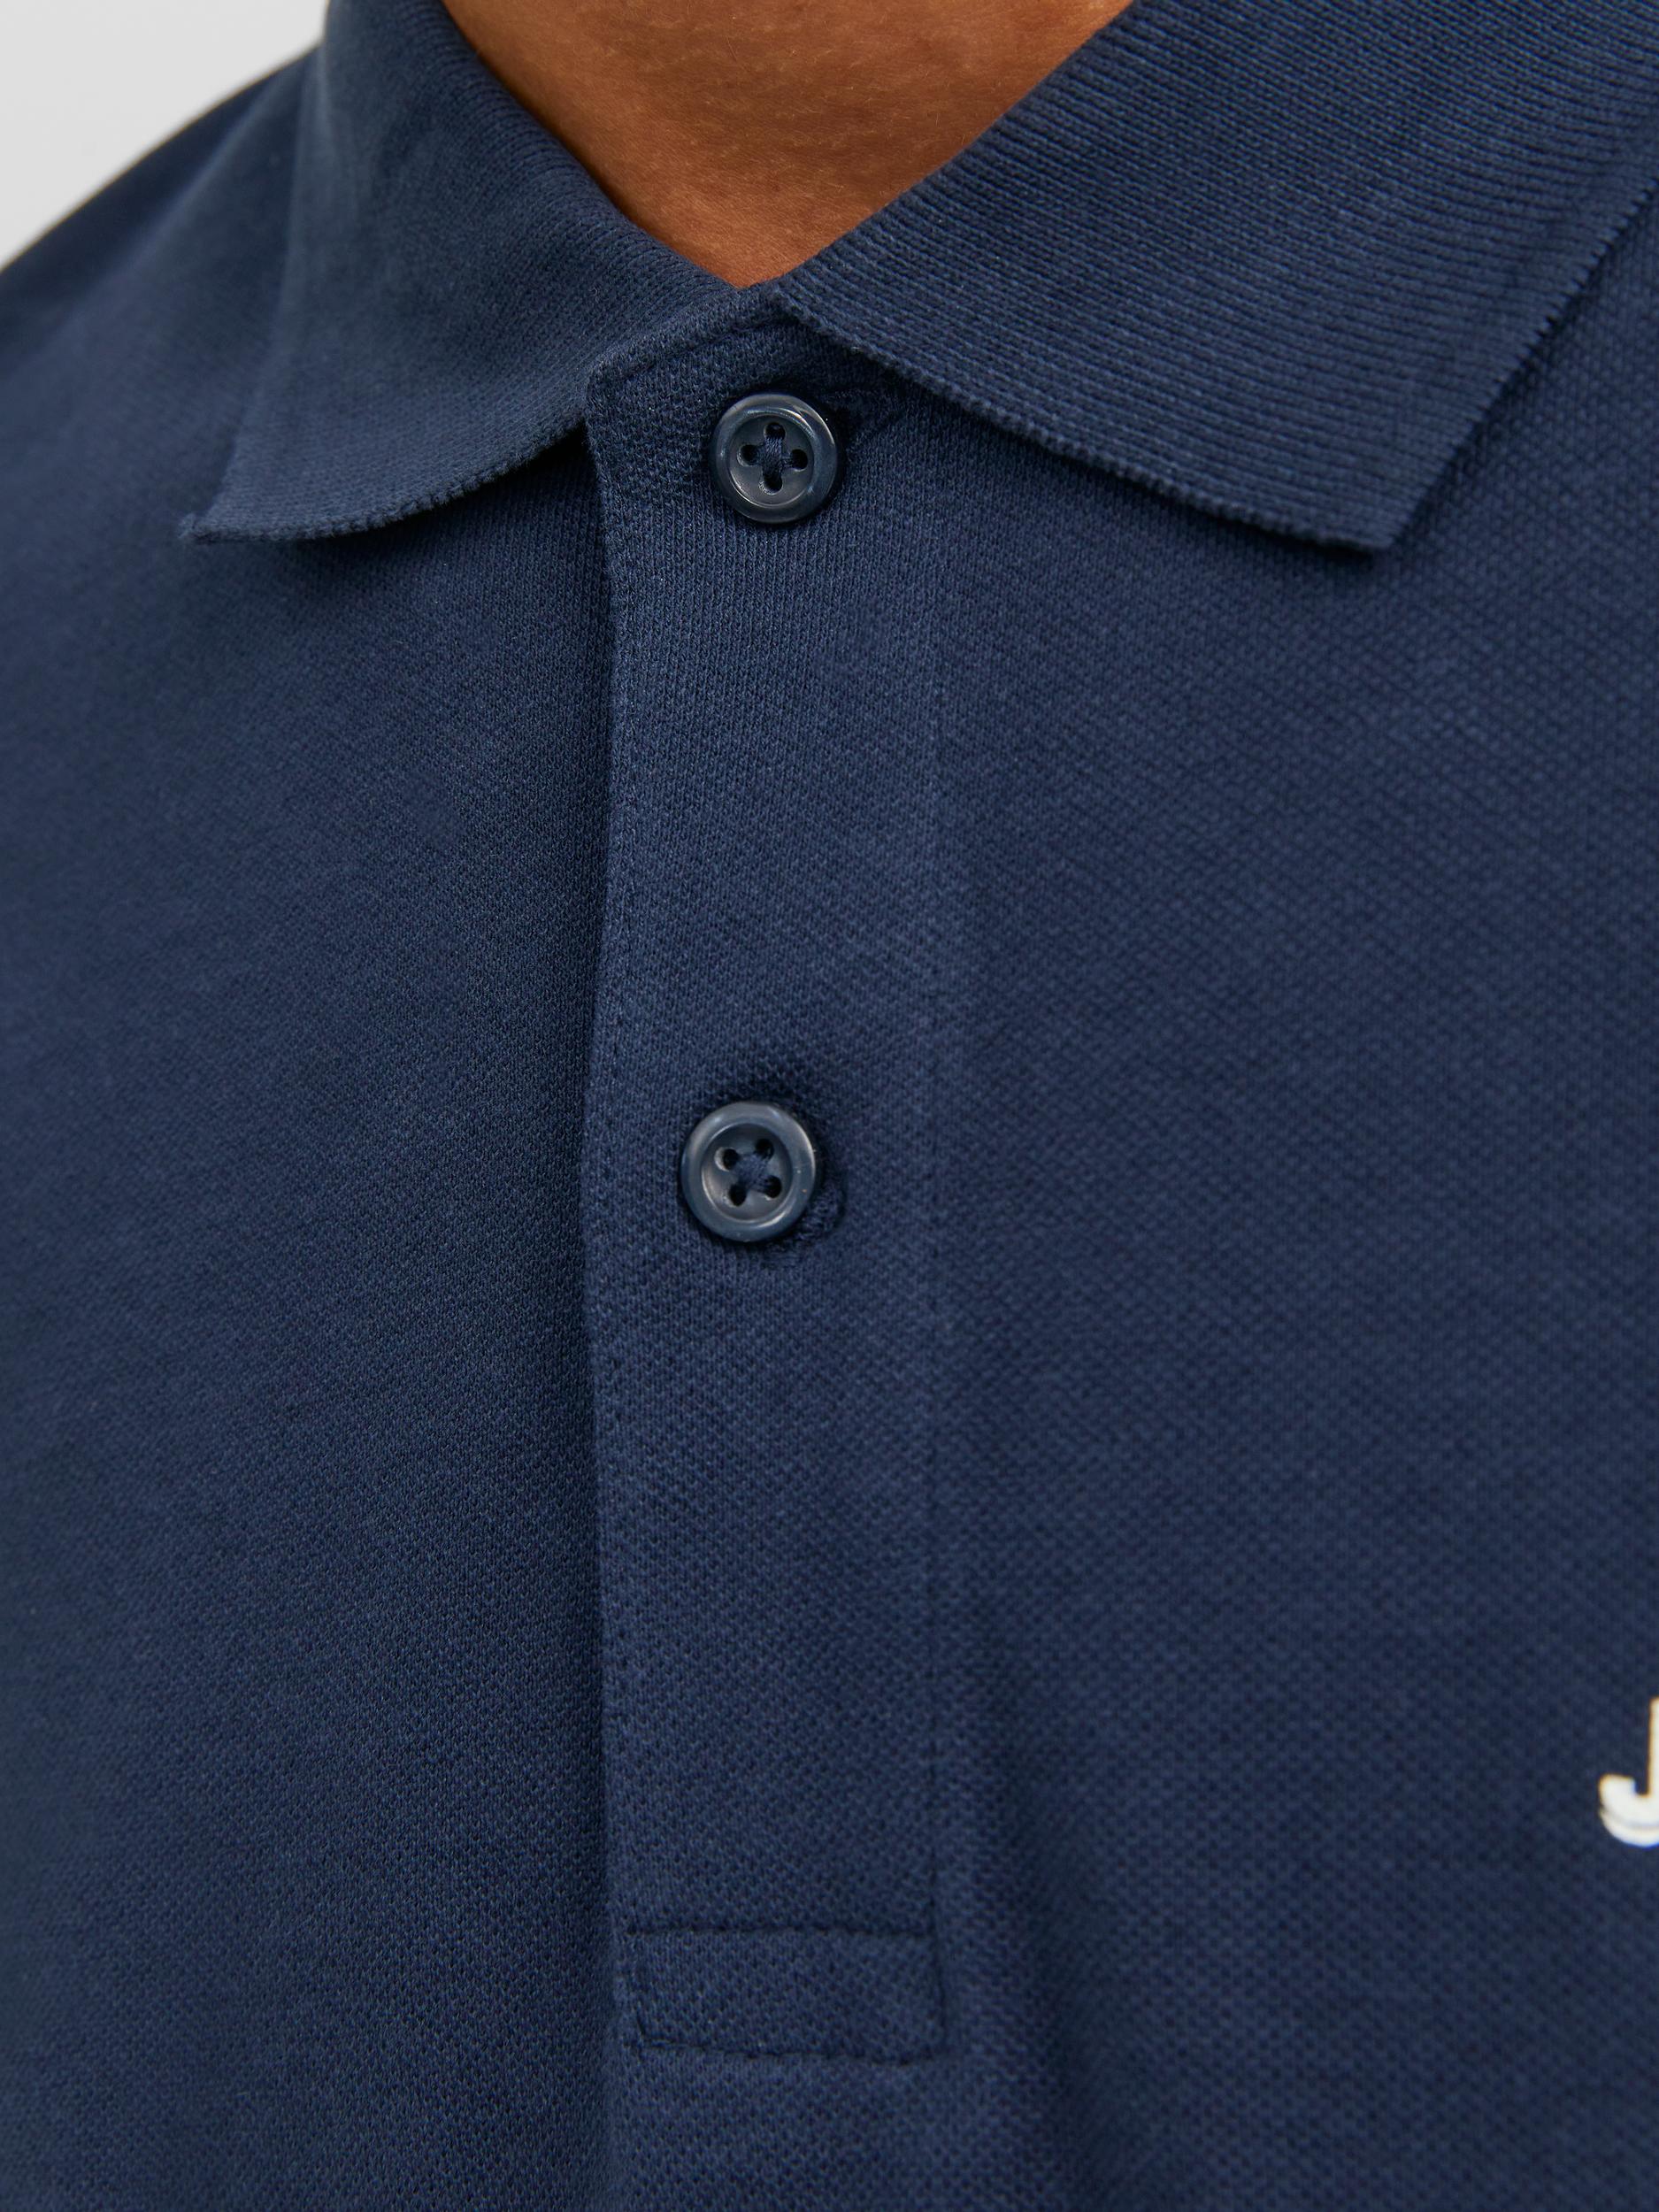 Jack & Jones Snorkel Polo Navy - Raw Menswear